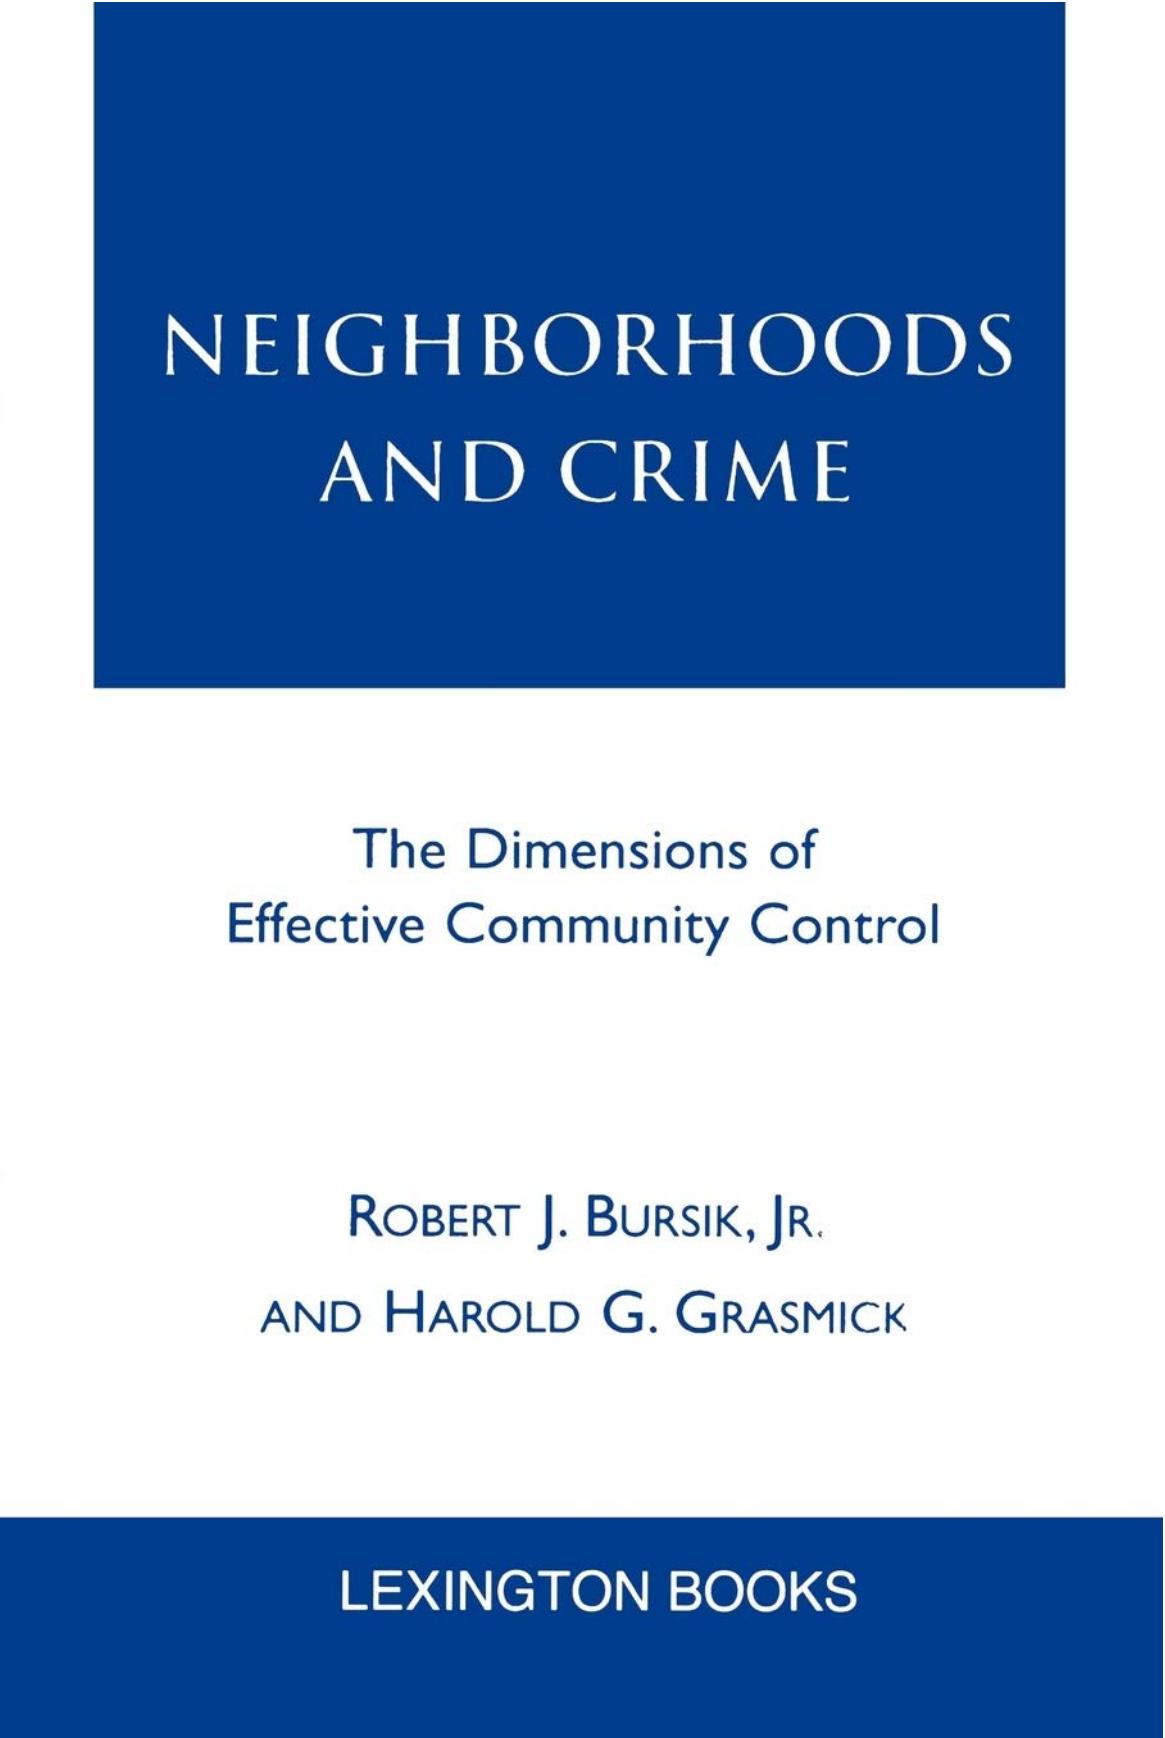 (eBook PDF)Neighborhoods and Crime: The Dimensions of Effective Community Control by Jr. Robert J. Bursik,Harold G. Grasmick